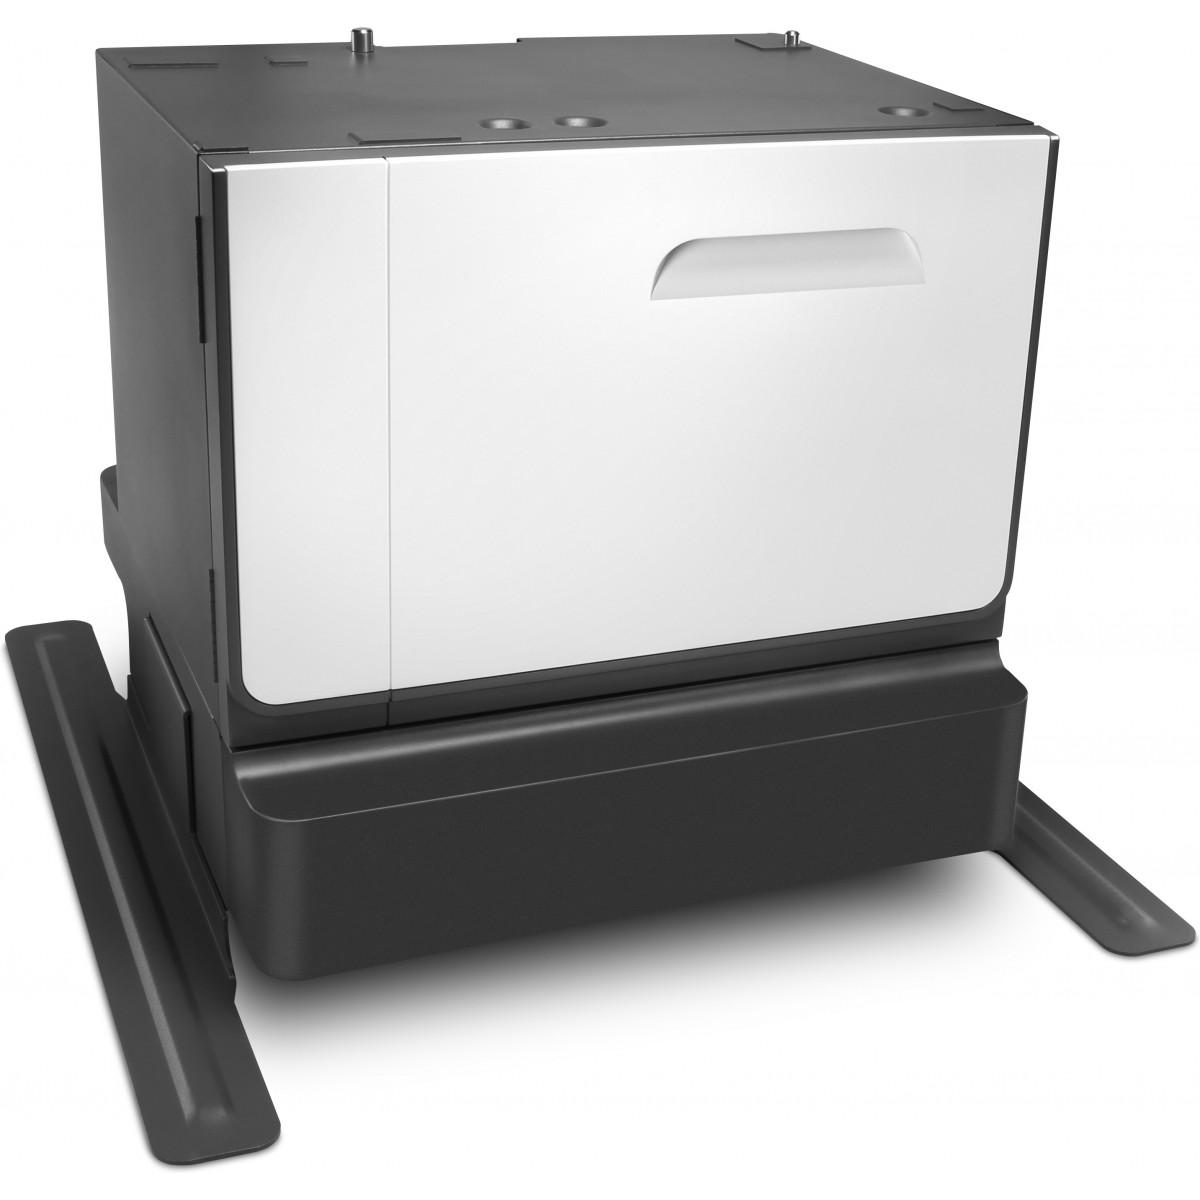 HP PageWide Enterprise Printer Cabinet and Stand - Black - Grey - PageWide Enterprise Color MFP 586 - Business - Enterprise - 66